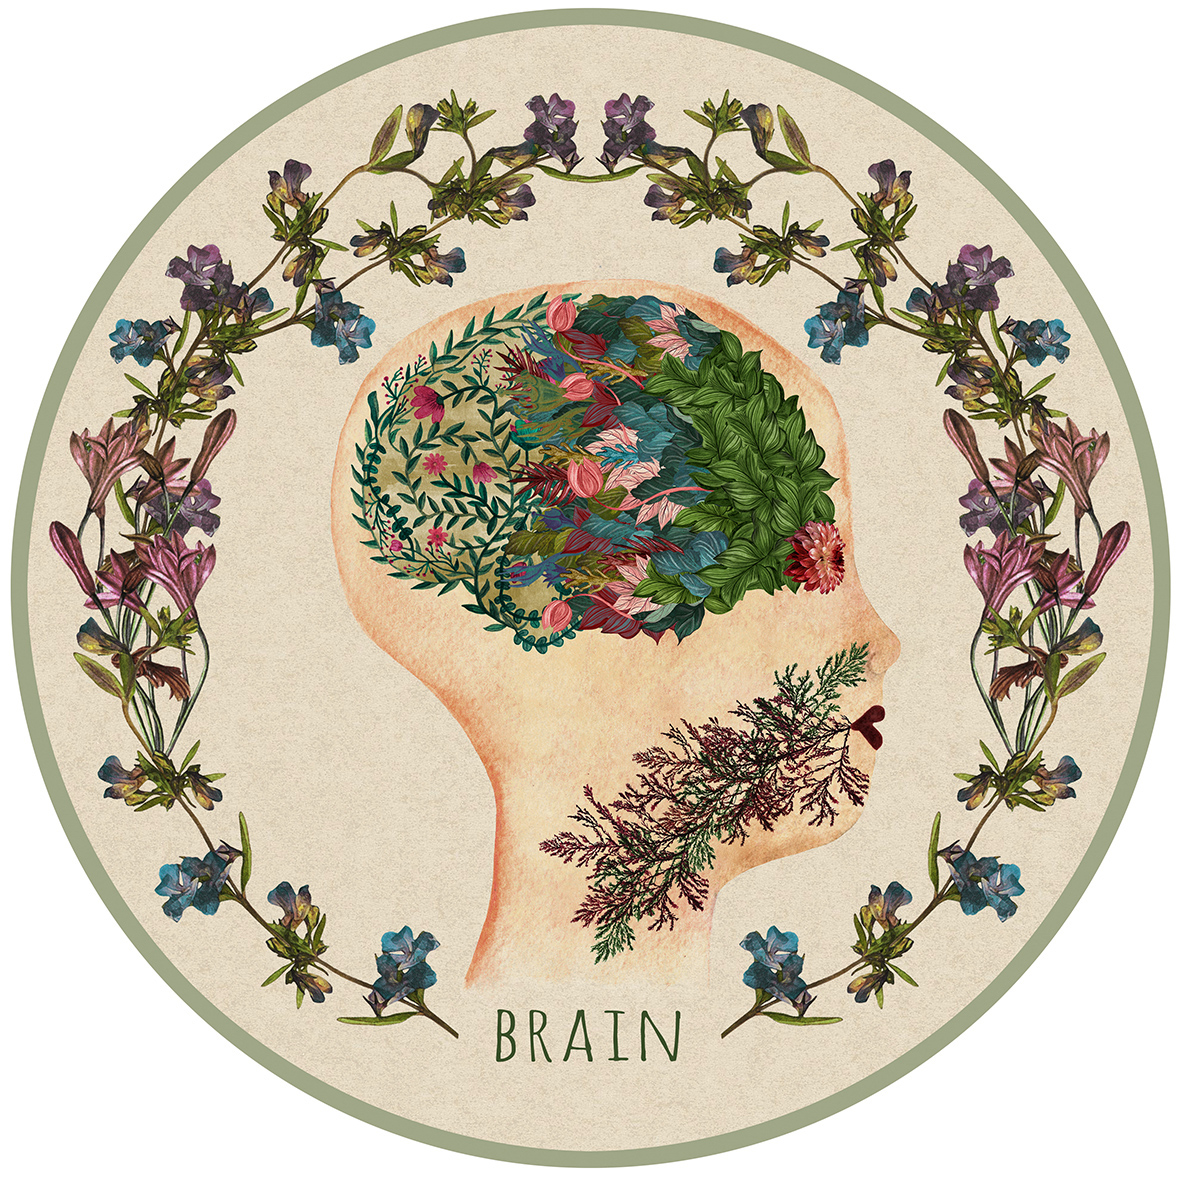 body brain breast Nature floral vegetation Flowers medicine Health